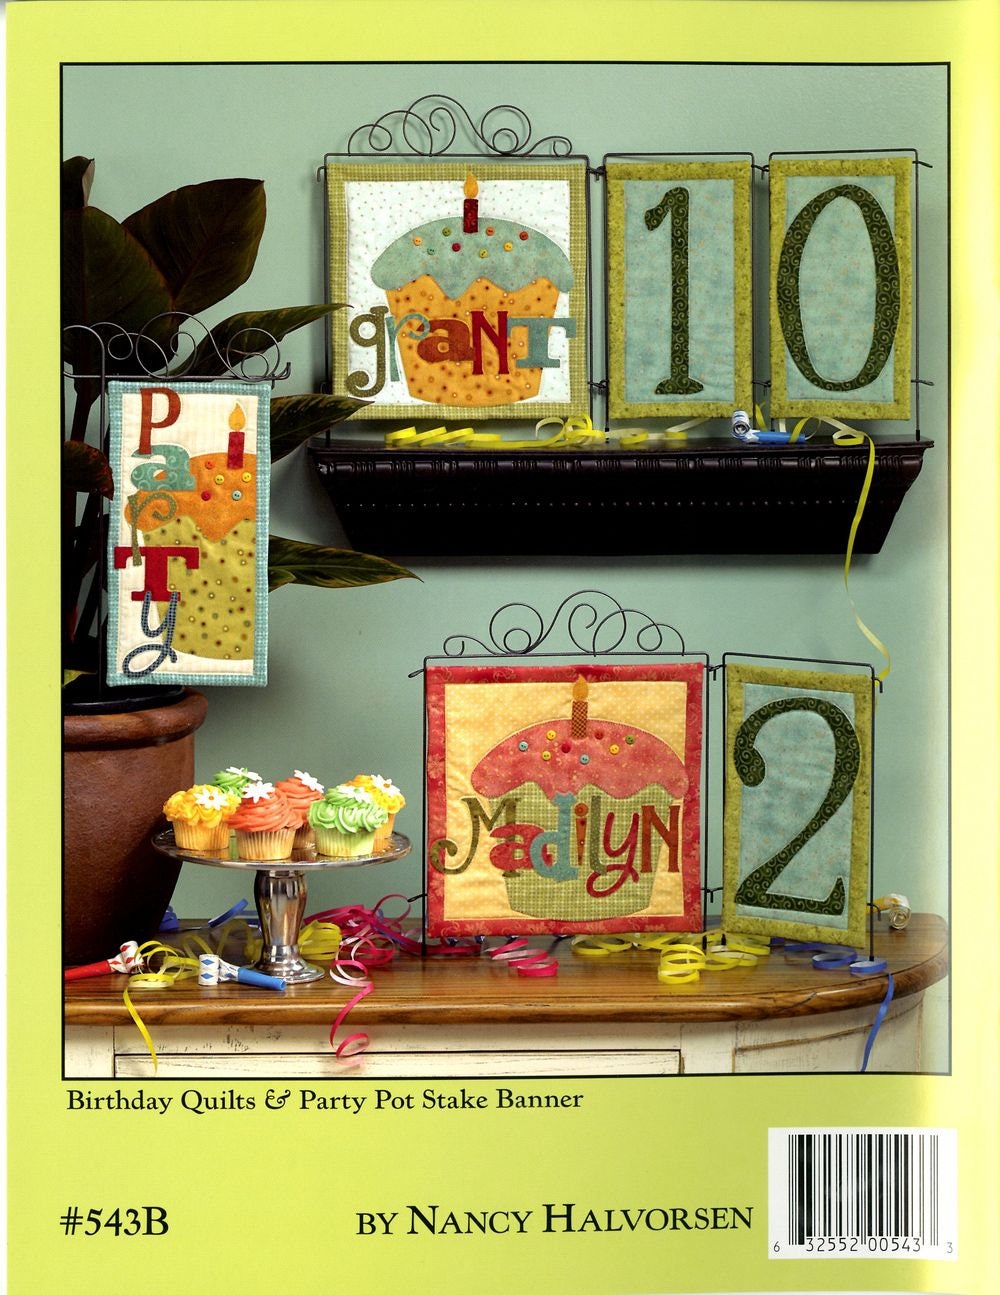 Count On It Quilt Pattern Book by Nancy Halvorsen of Art to Heart